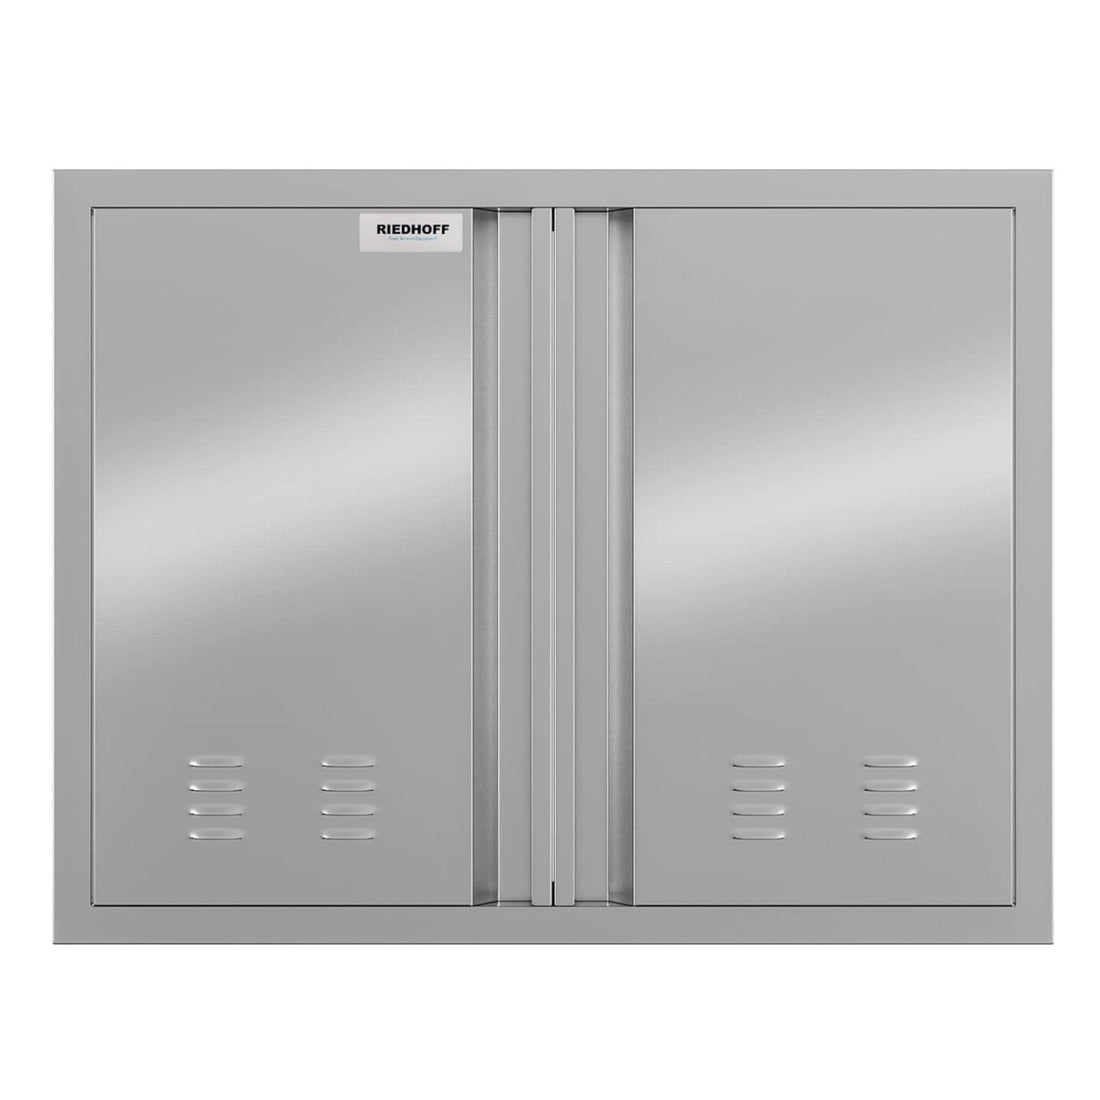 GARVEE 24x26 Inch 304 Stainless Steel Outdoor Kitchen Access Door with Recessed Handle Silver